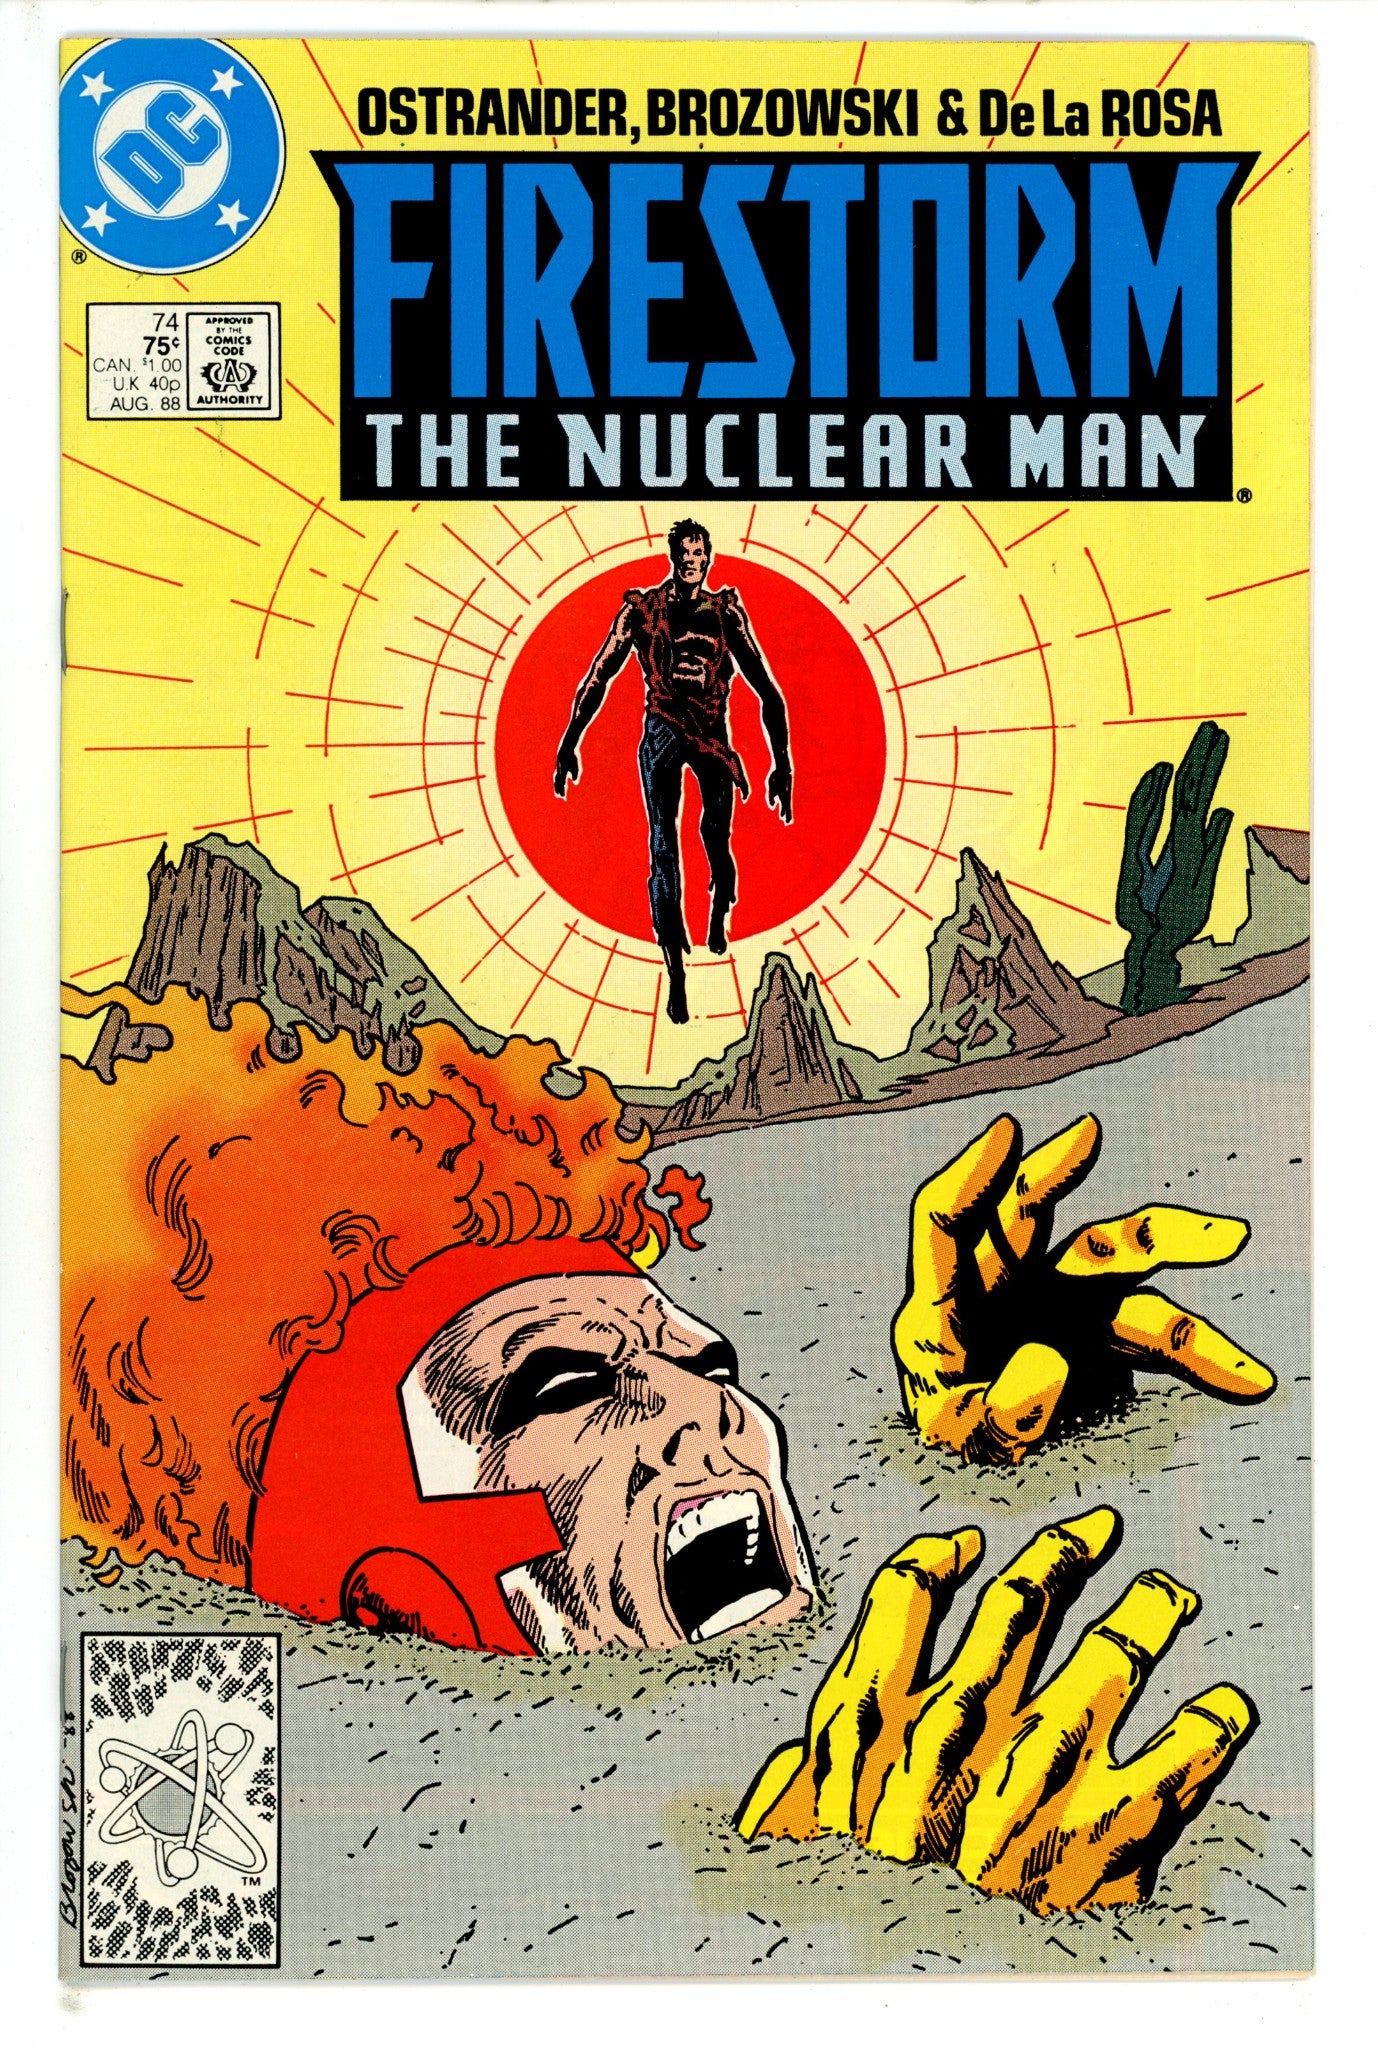 Firestorm the Nuclear Man Vol 2 74 (1988)